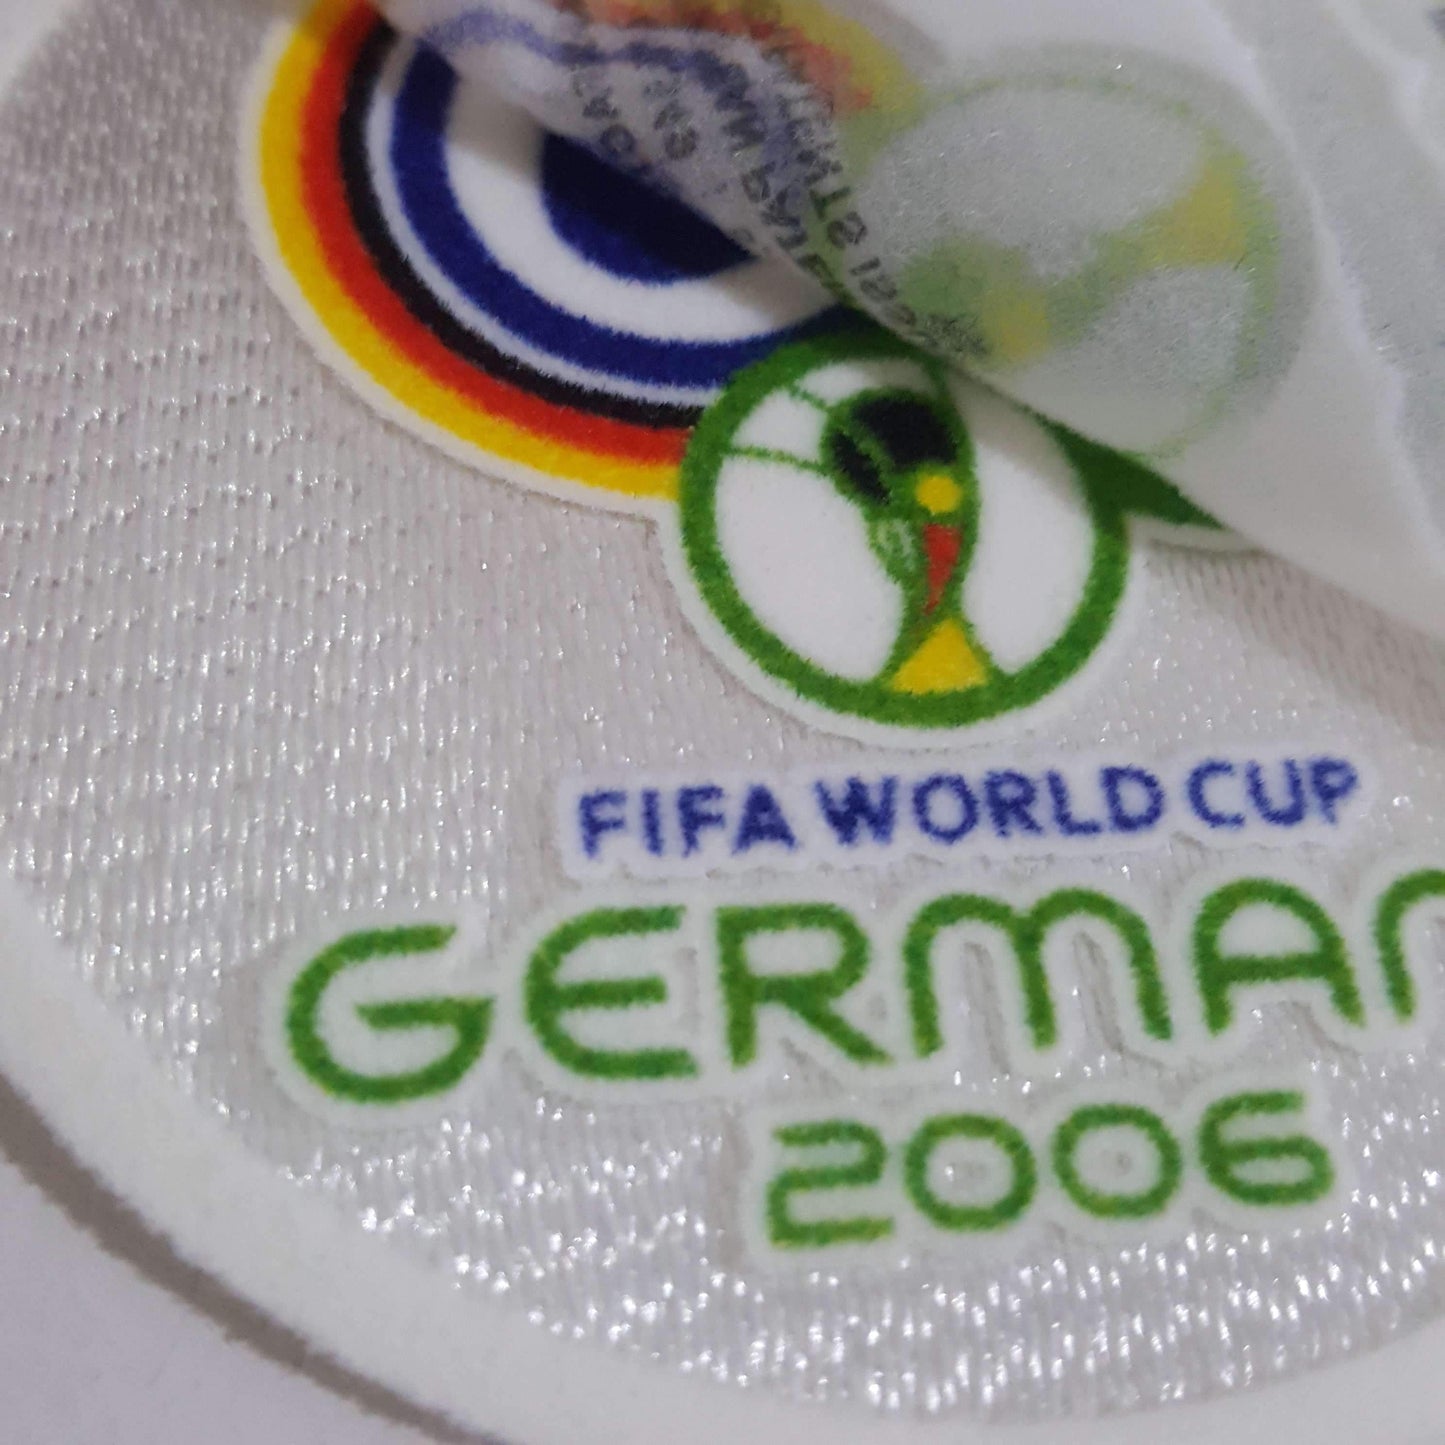 FIFA World Cup 2006 Germany - ClassicFootballJersey